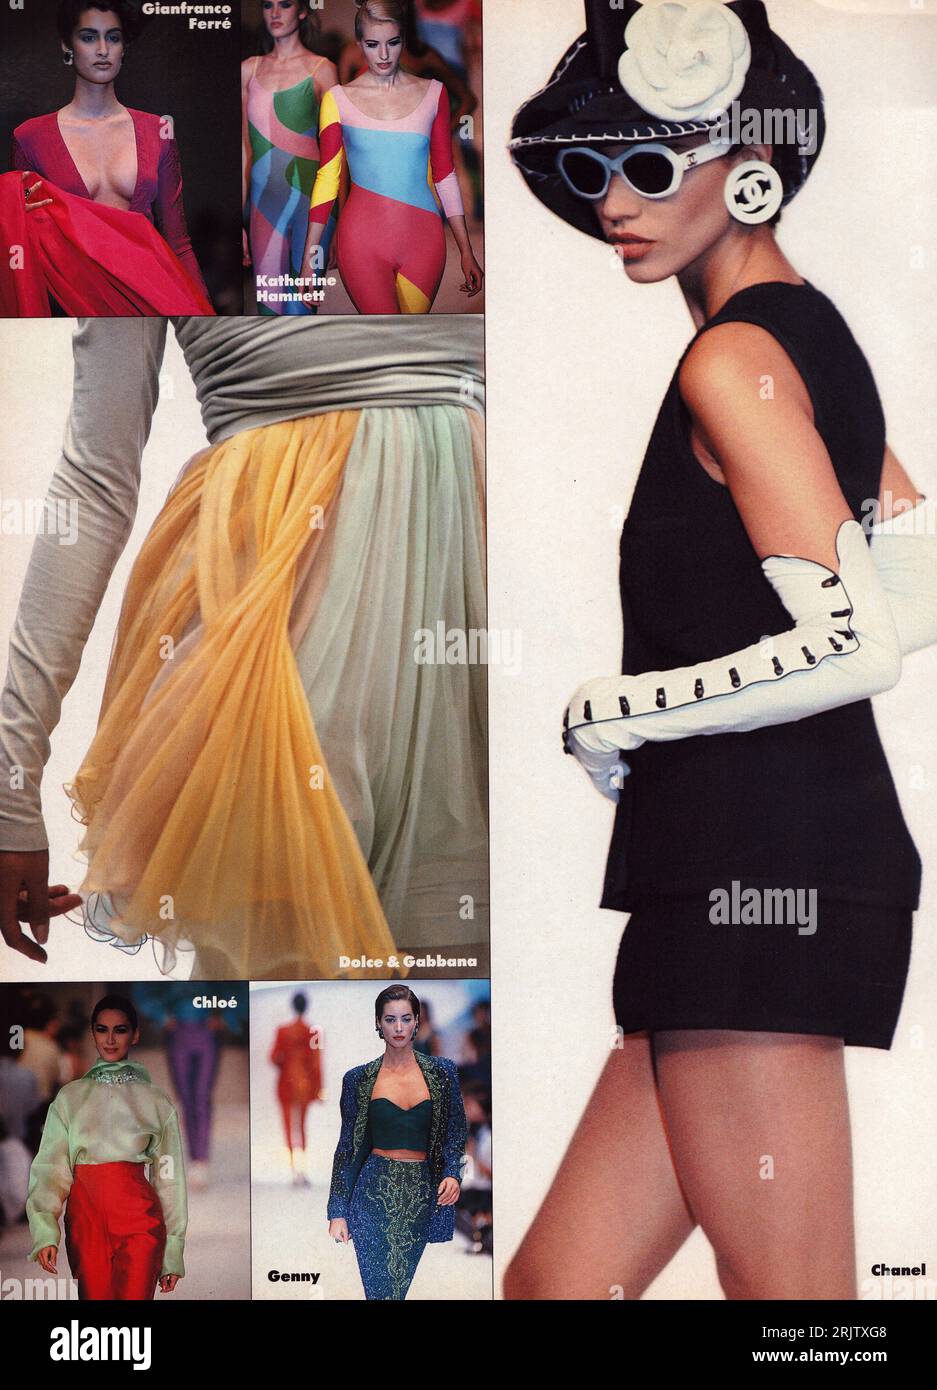 Vintage fashion Catwalk 1991 for Chanel, Chloe, Genny, DOlce & Gabbana, Gianfranco Ferre, Katharine Hamnett Vintage Catwalk photographs Stock Photo